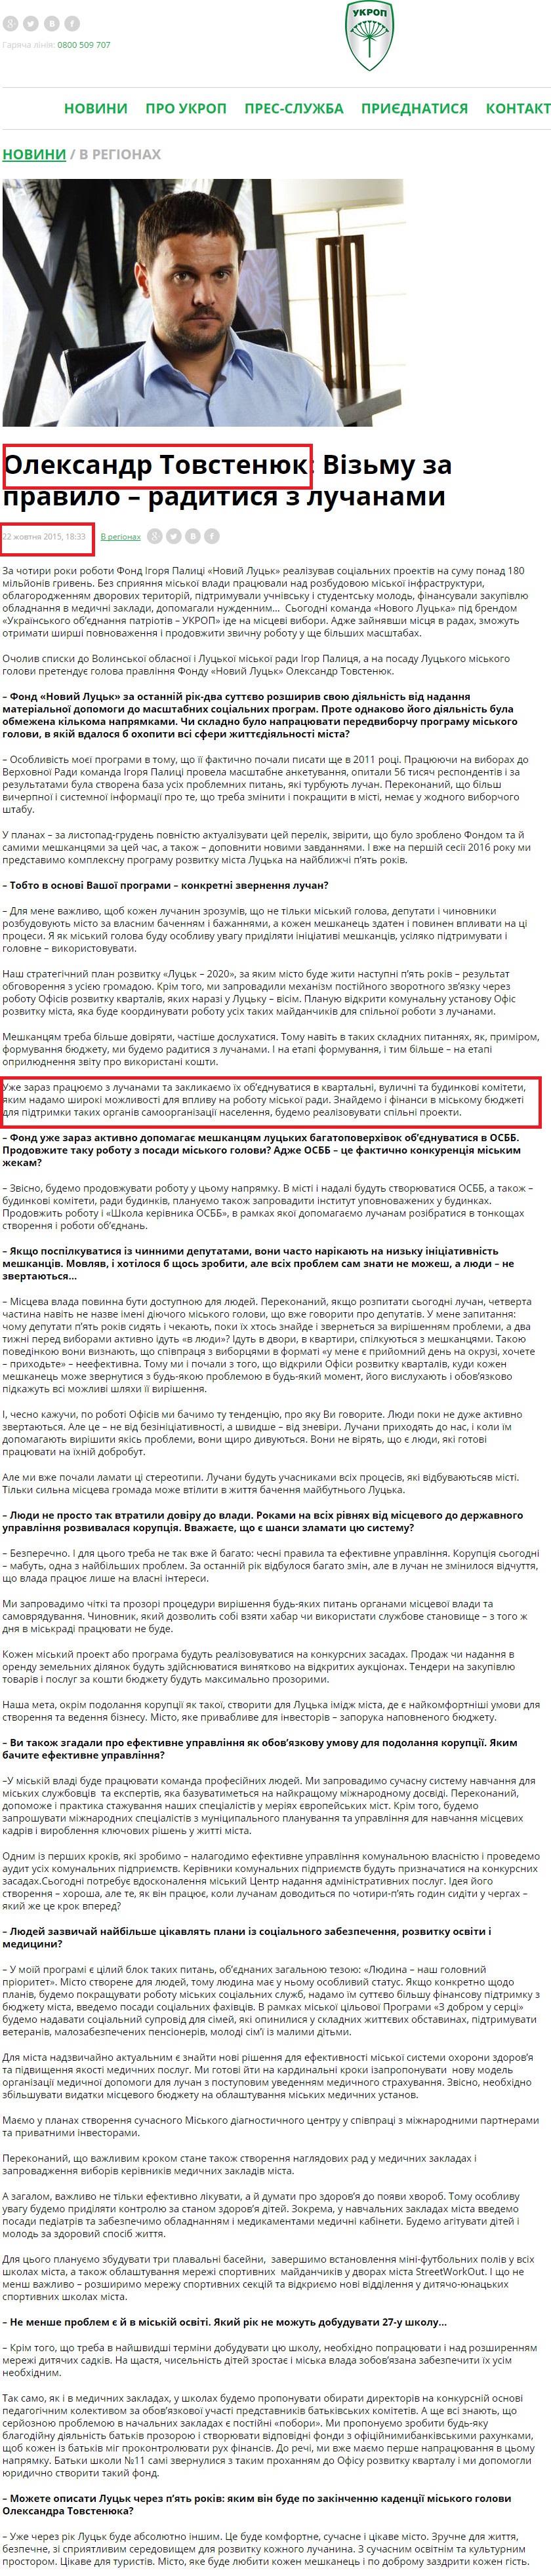 http://www.ukrop.com.ua/uk/news/regional/816-oleksandr-tovstenyuk-vizmu-za-pravilo-raditisya-z-luchanami